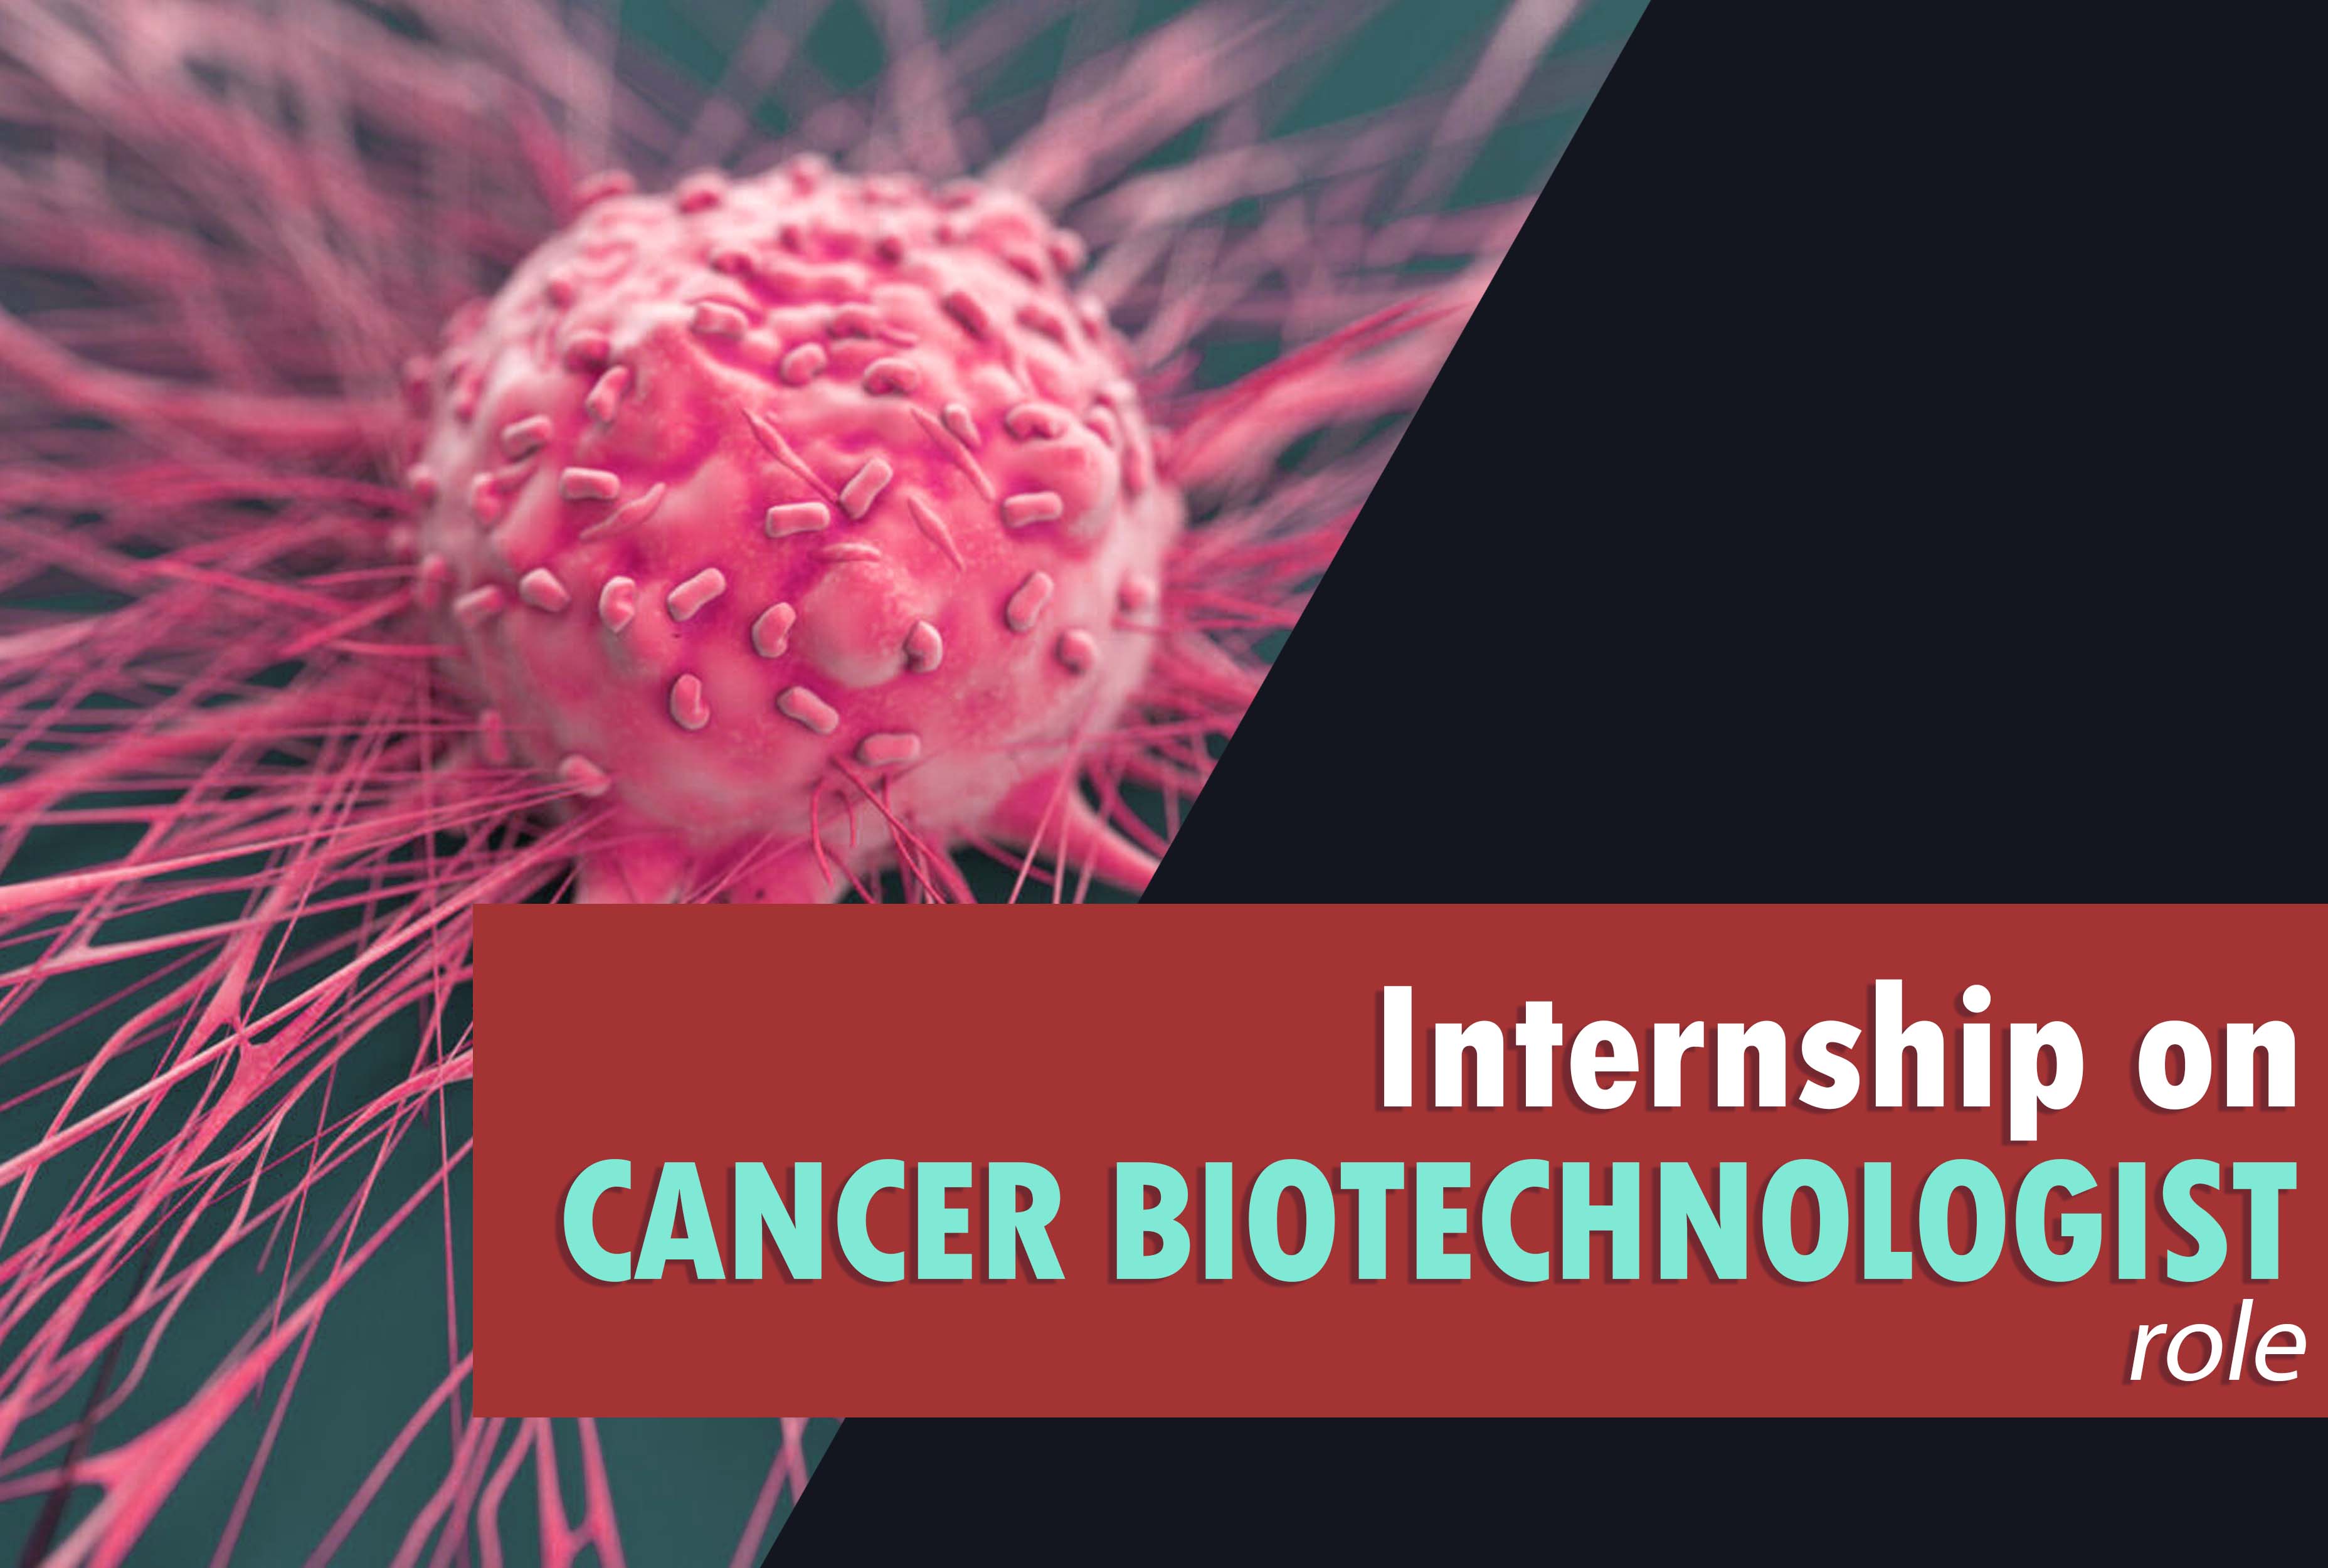 Internship on cancer biotechnologist role